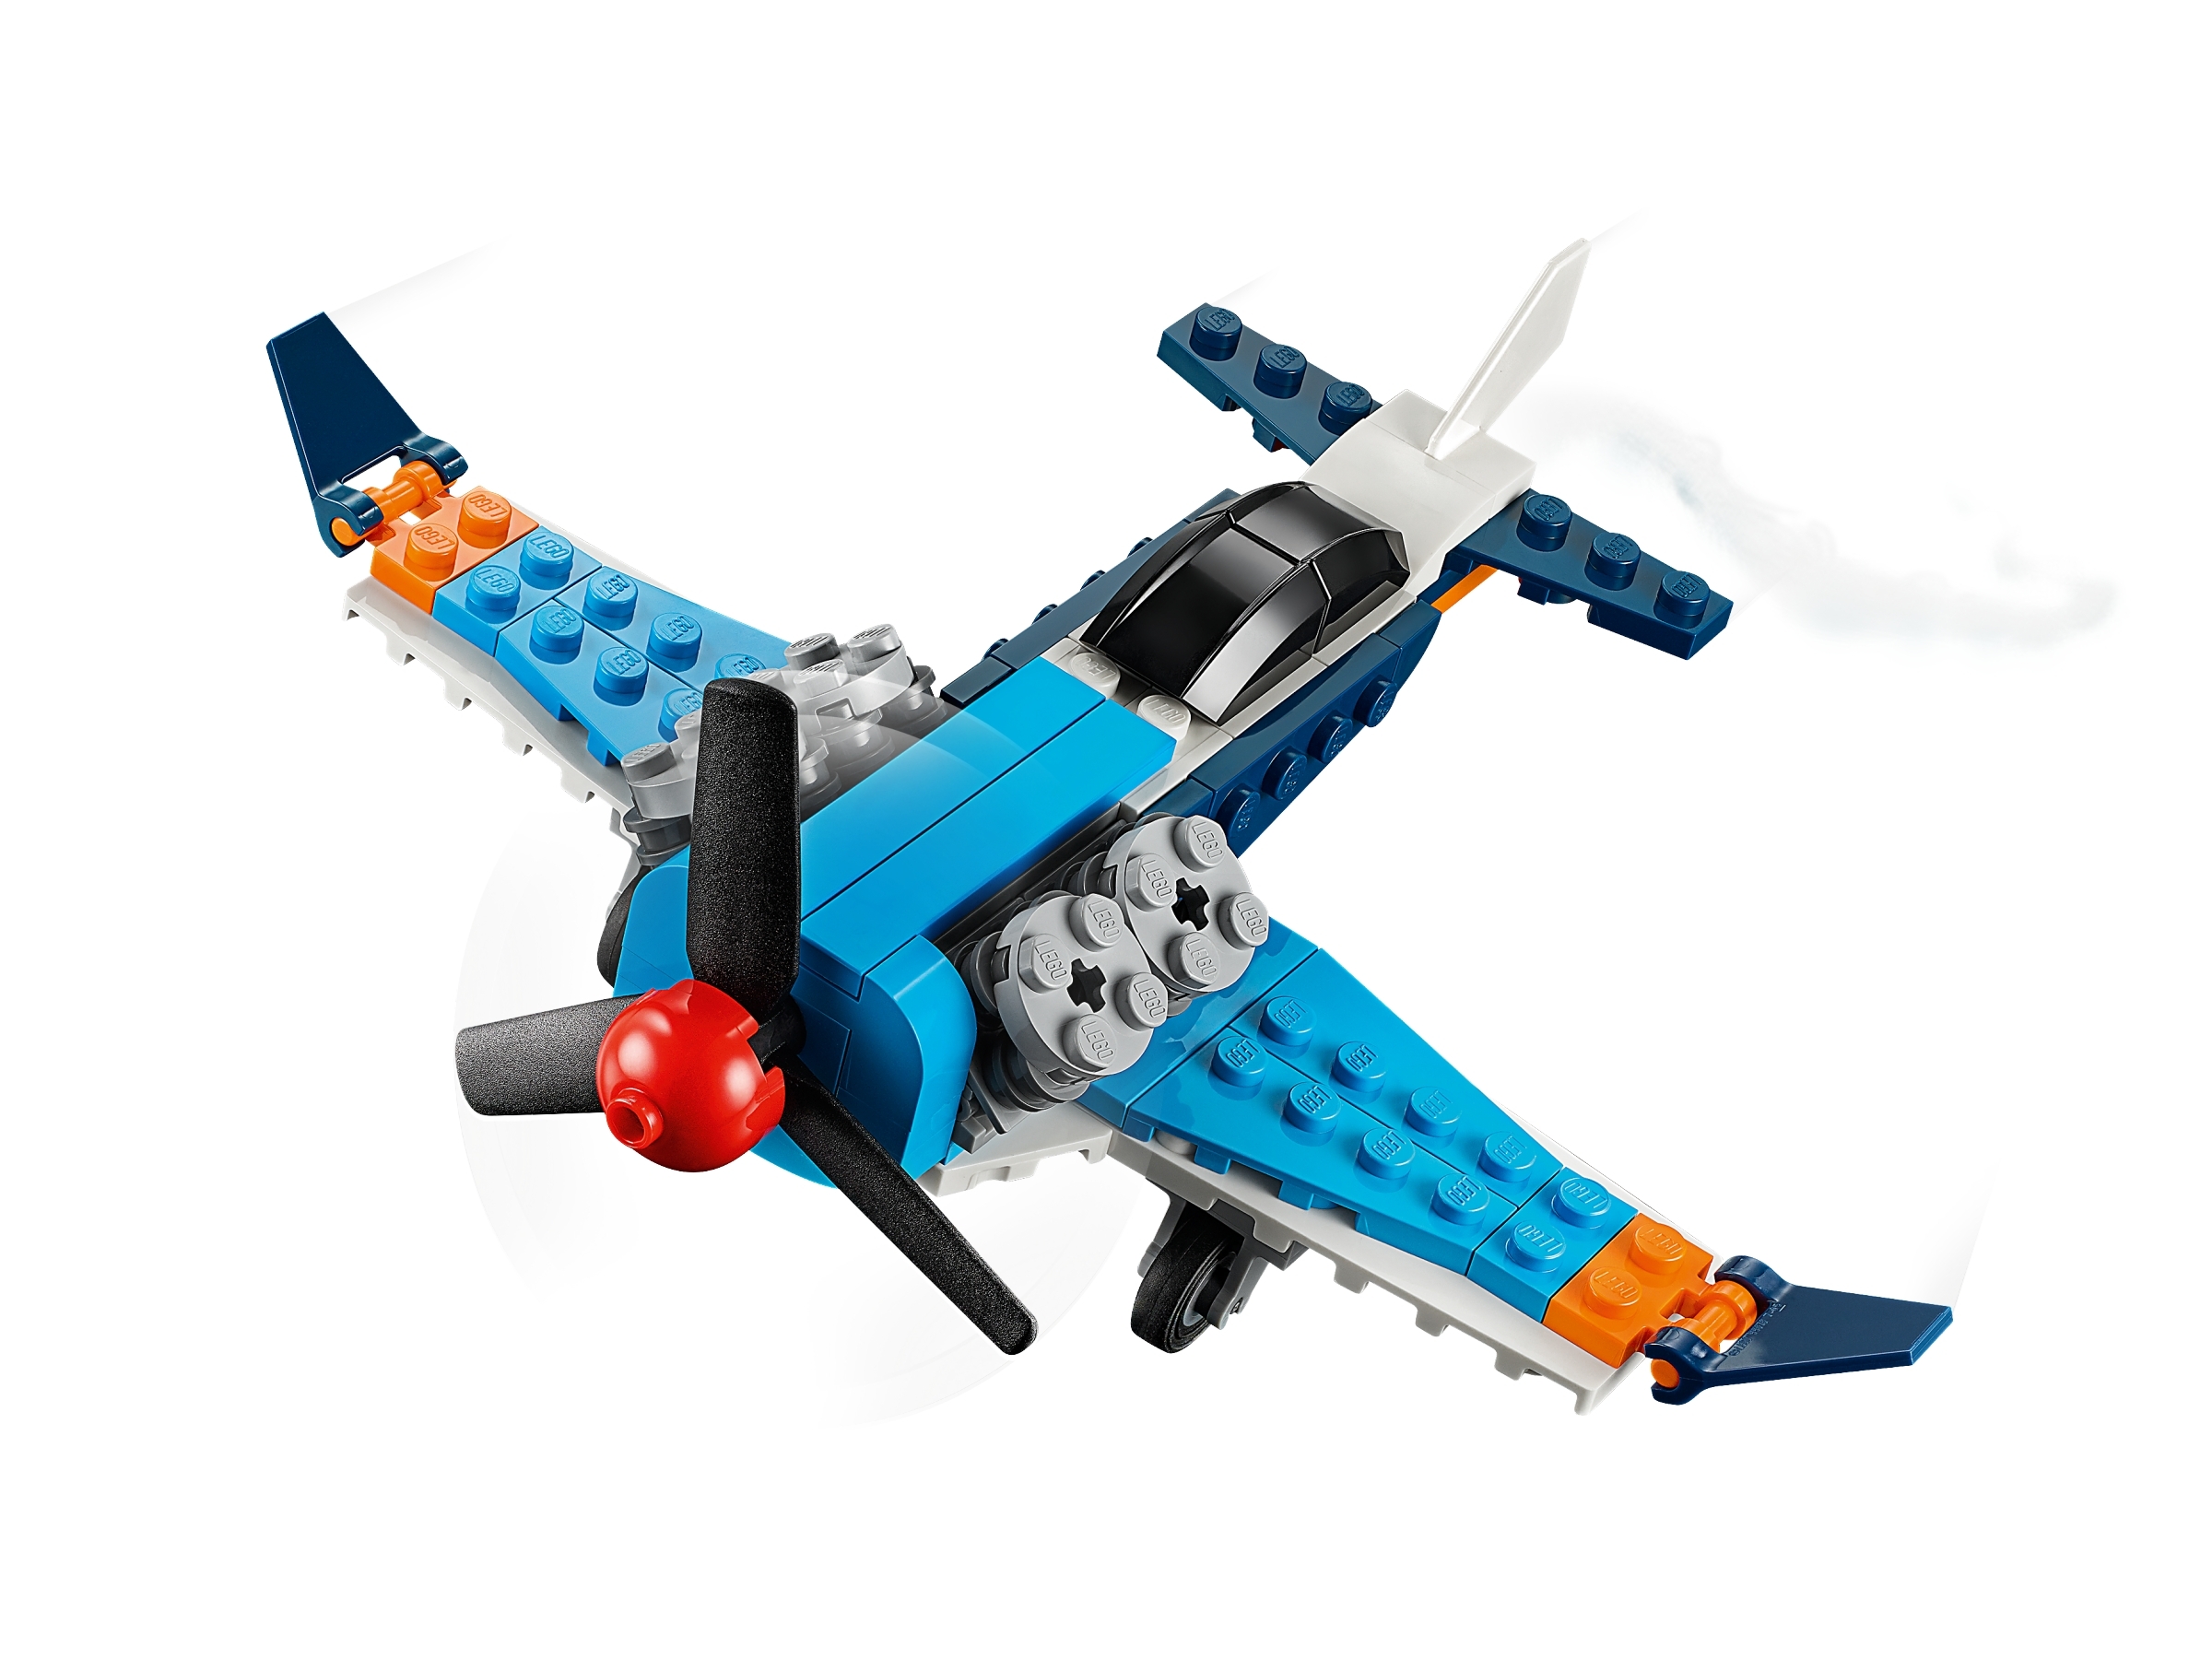 Reparation mulig aktivt Derfor Propeller Plane 31099 | Creator 3-in-1 | Buy online at the Official LEGO®  Shop US